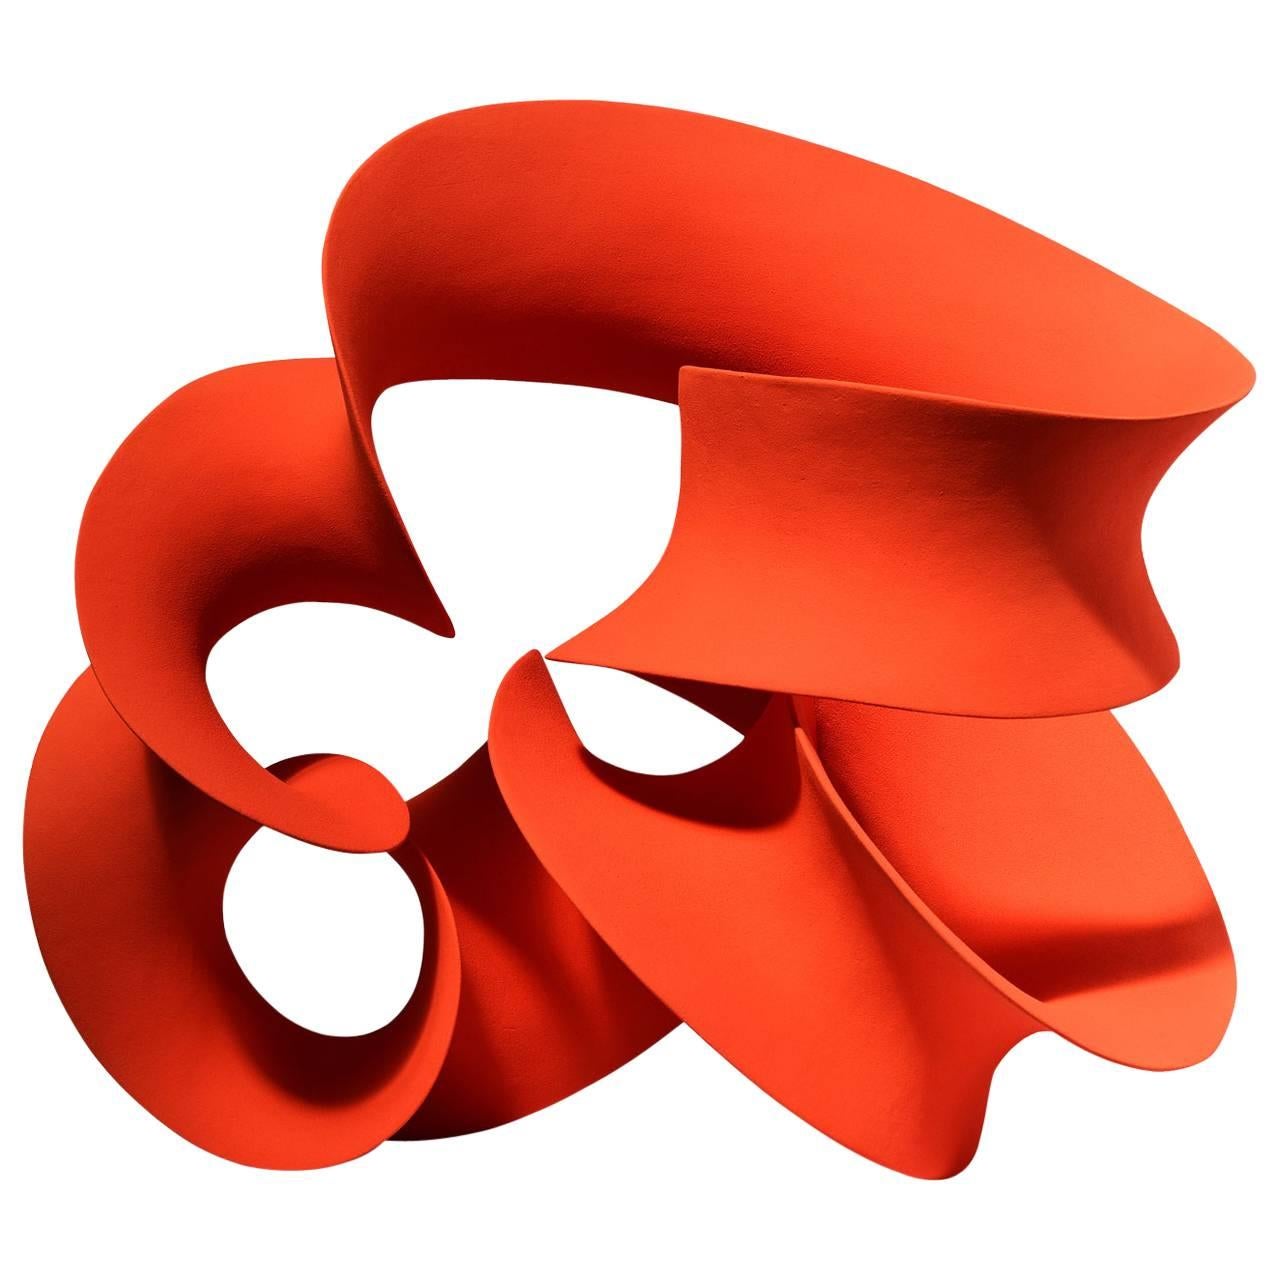 Orange Continuous Form by Merete Rasmussen